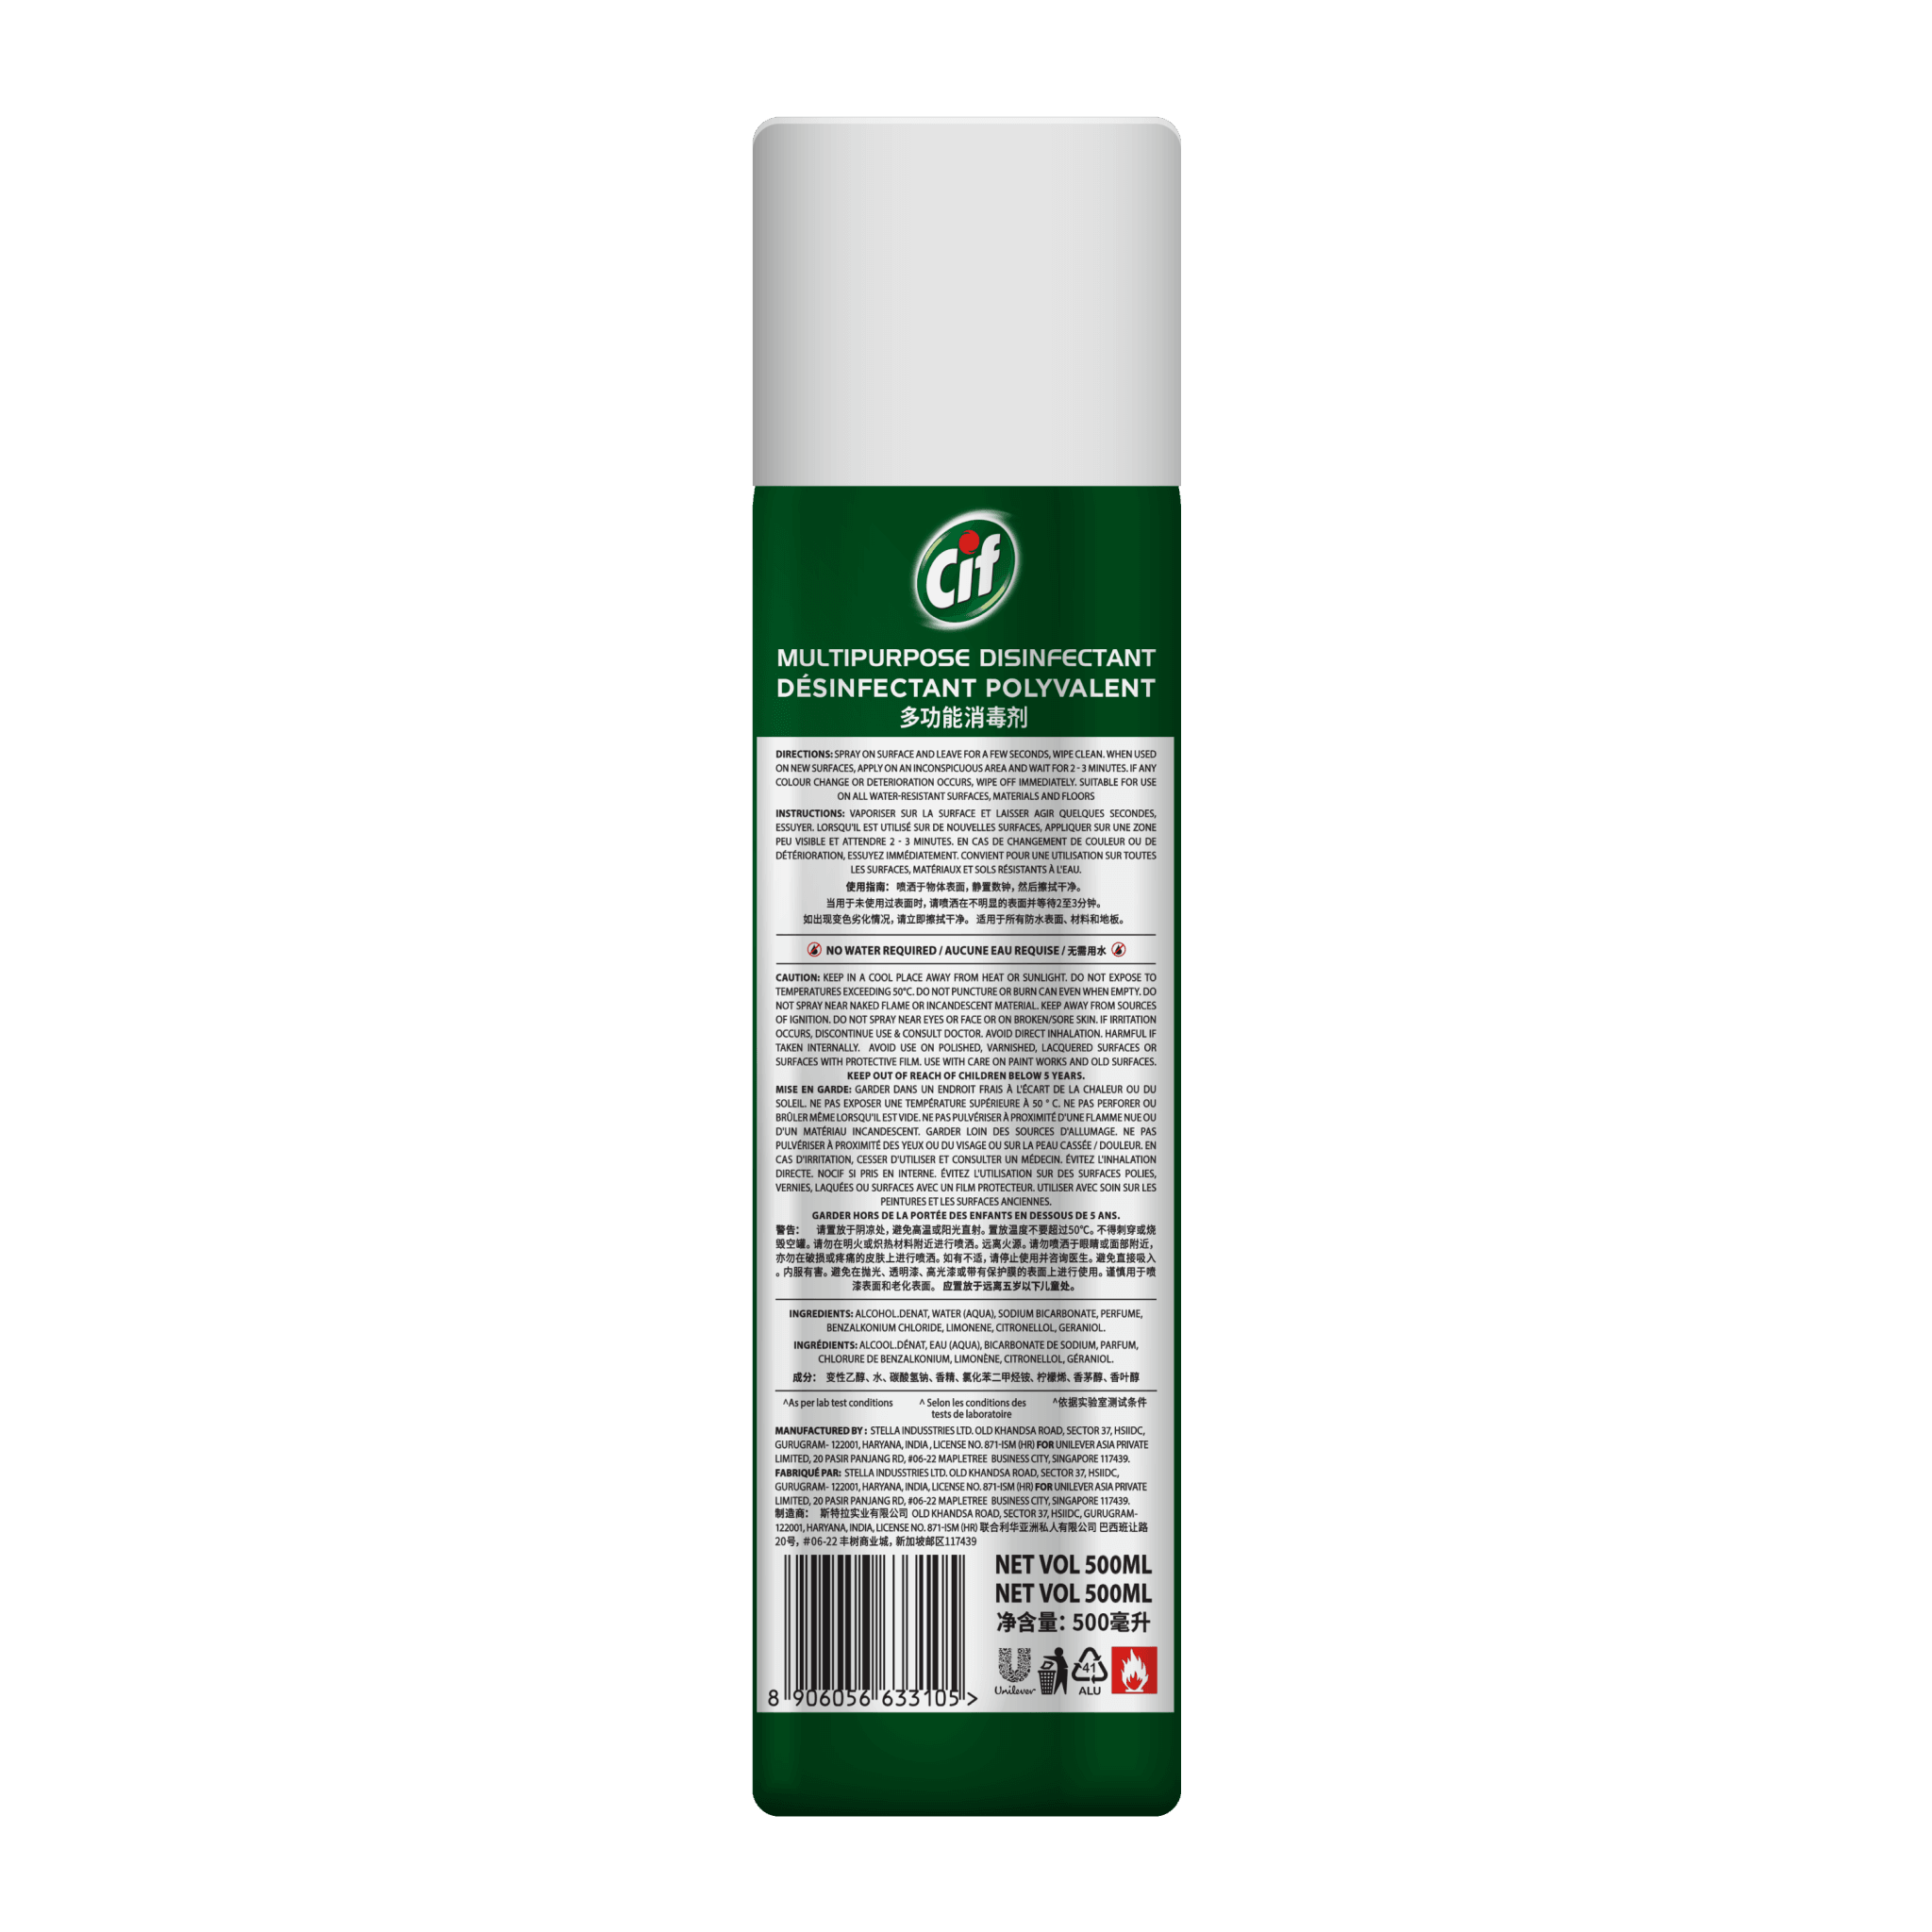 SALE - Cif 1+1 disinfectant spray 500ml - Unilever Professional Philippines